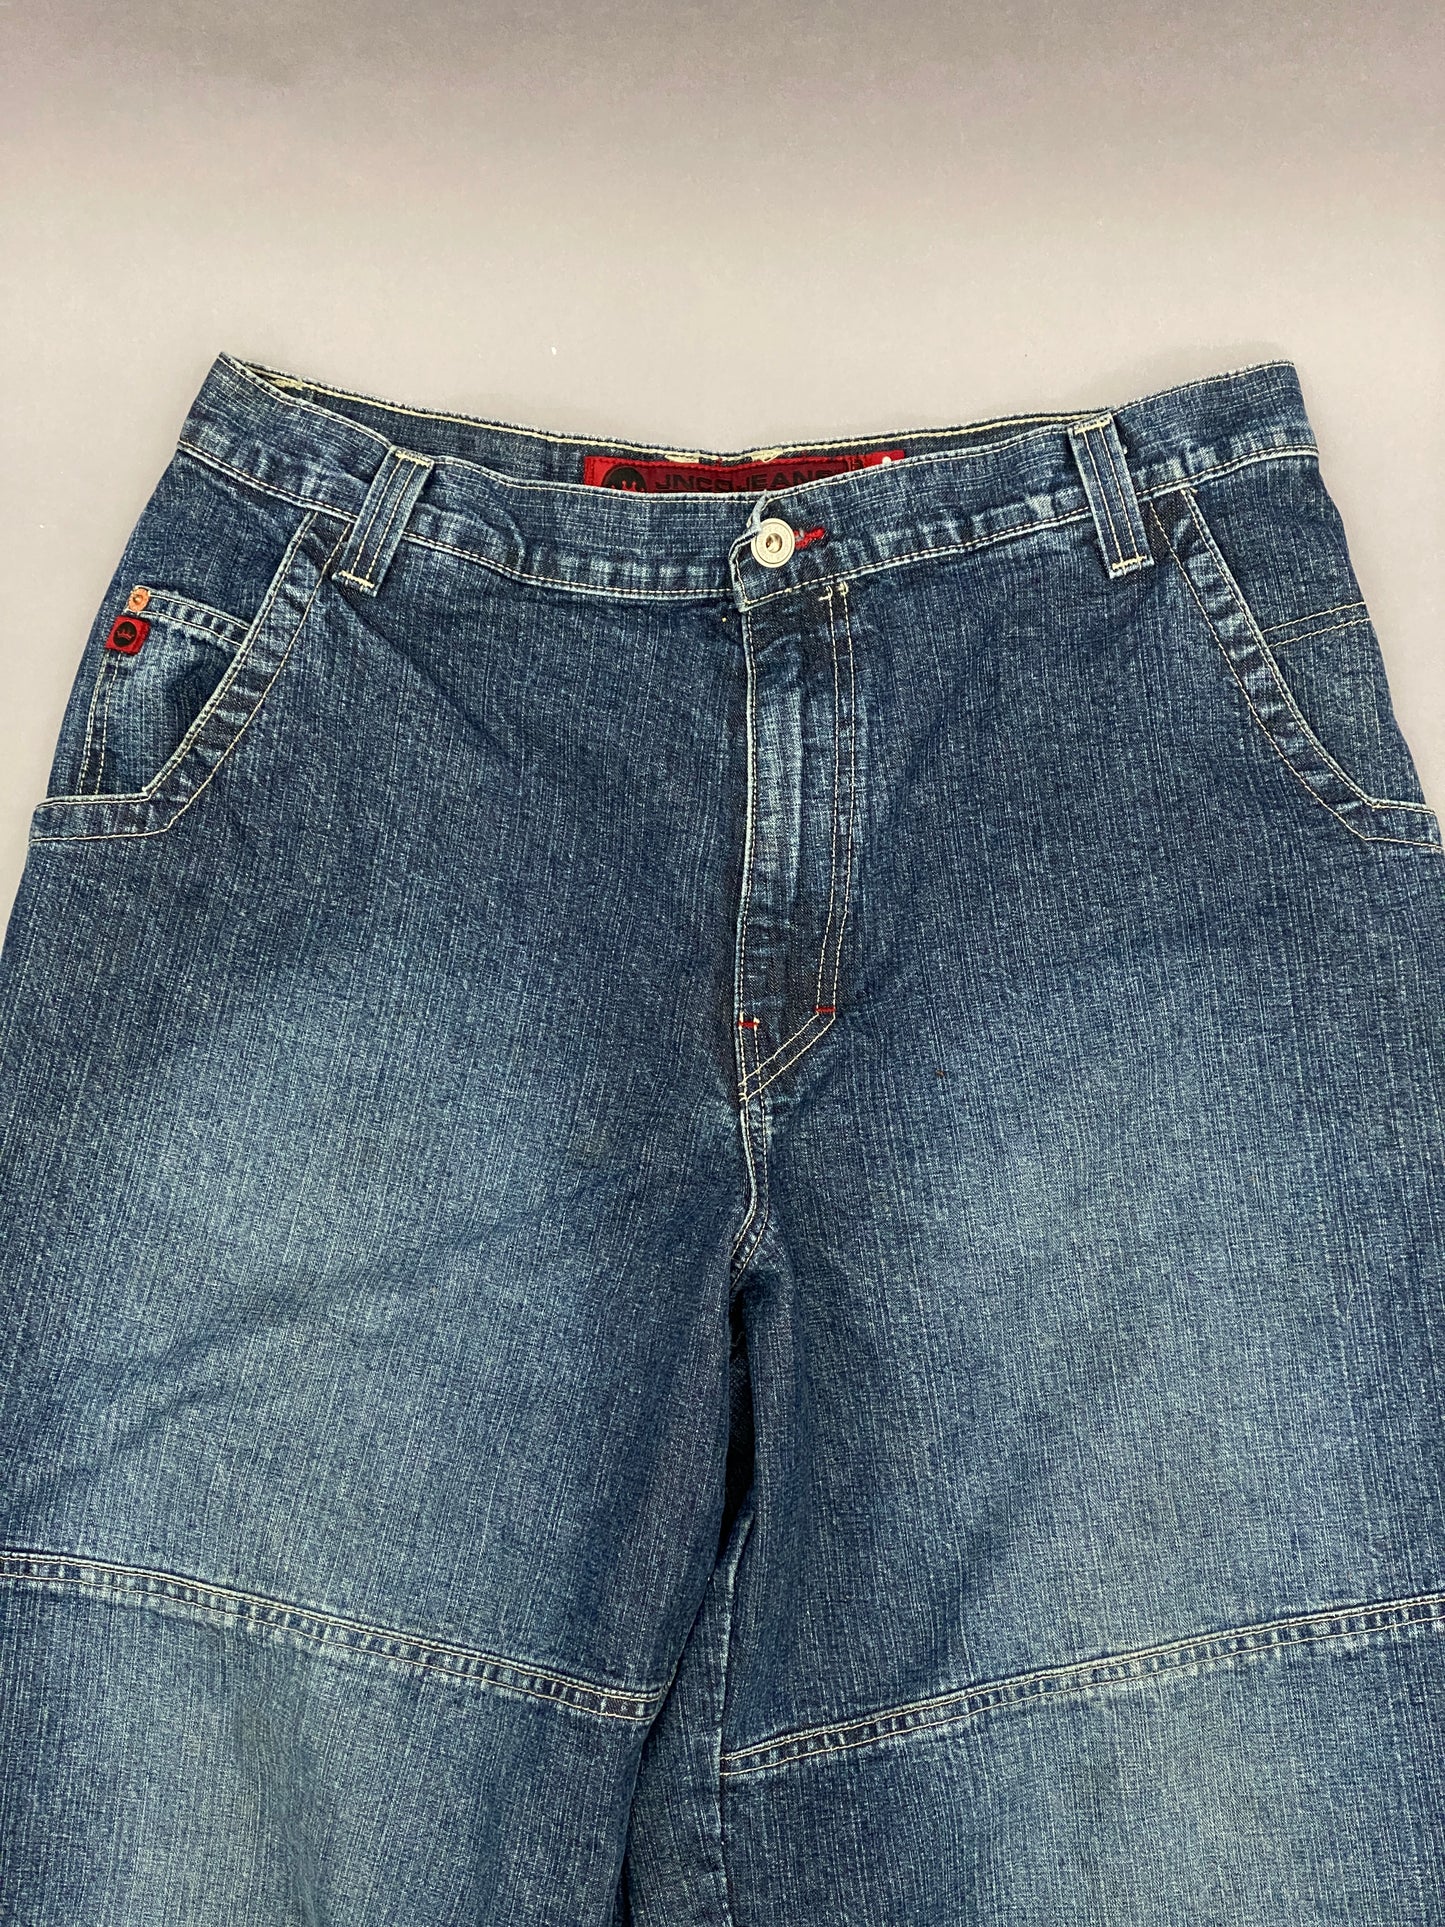 JNCO Carpenter Vintage Jeans - 36x32